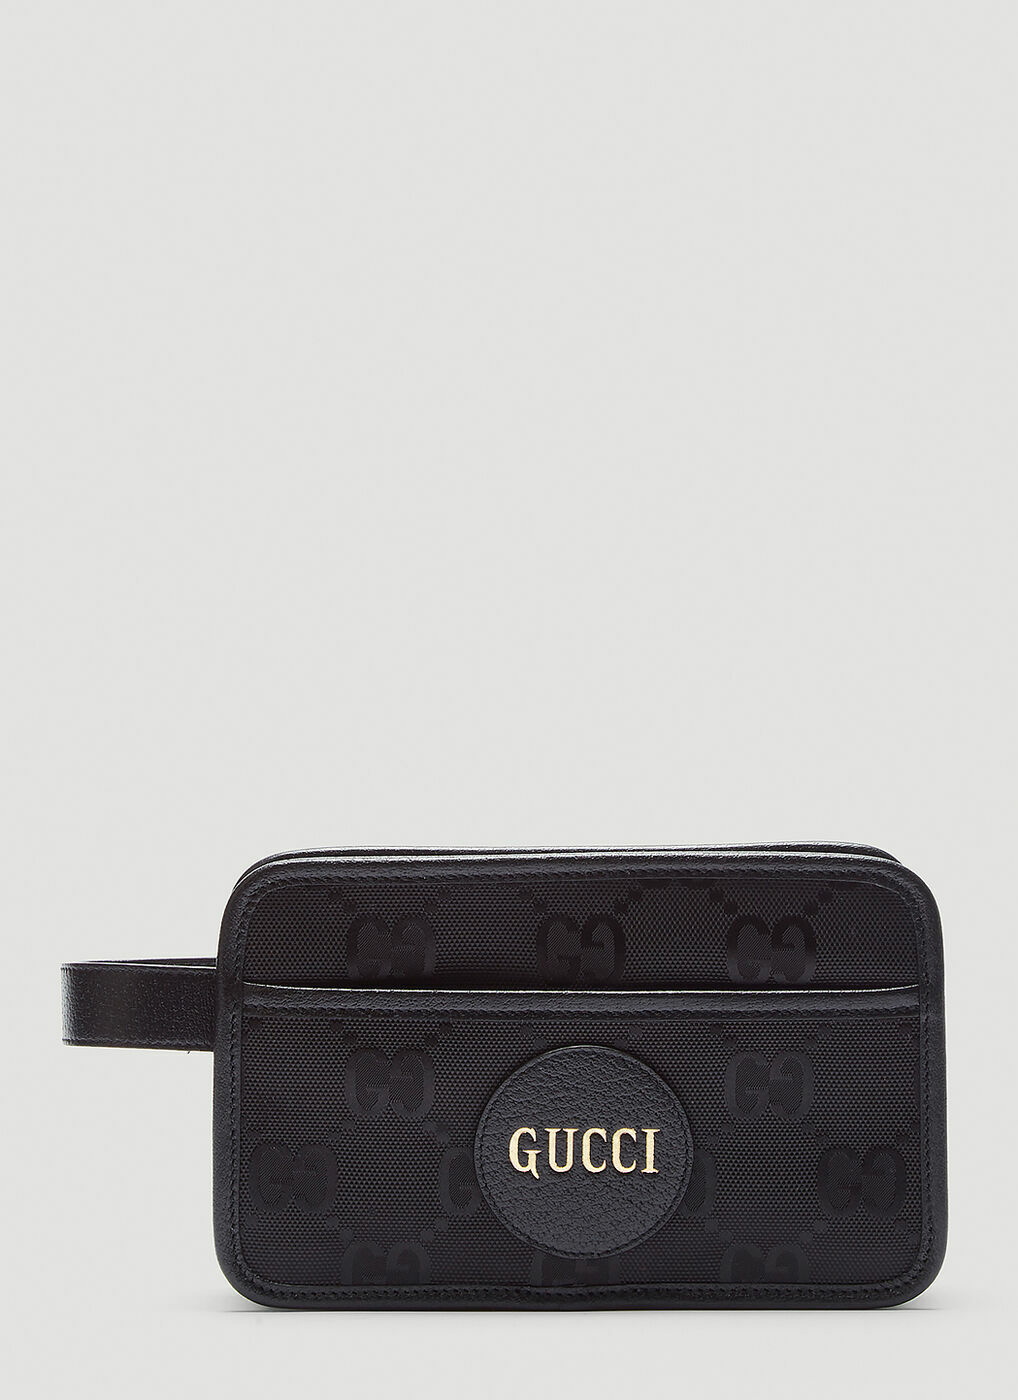 Gucci Black Nylon Toiletry Bag